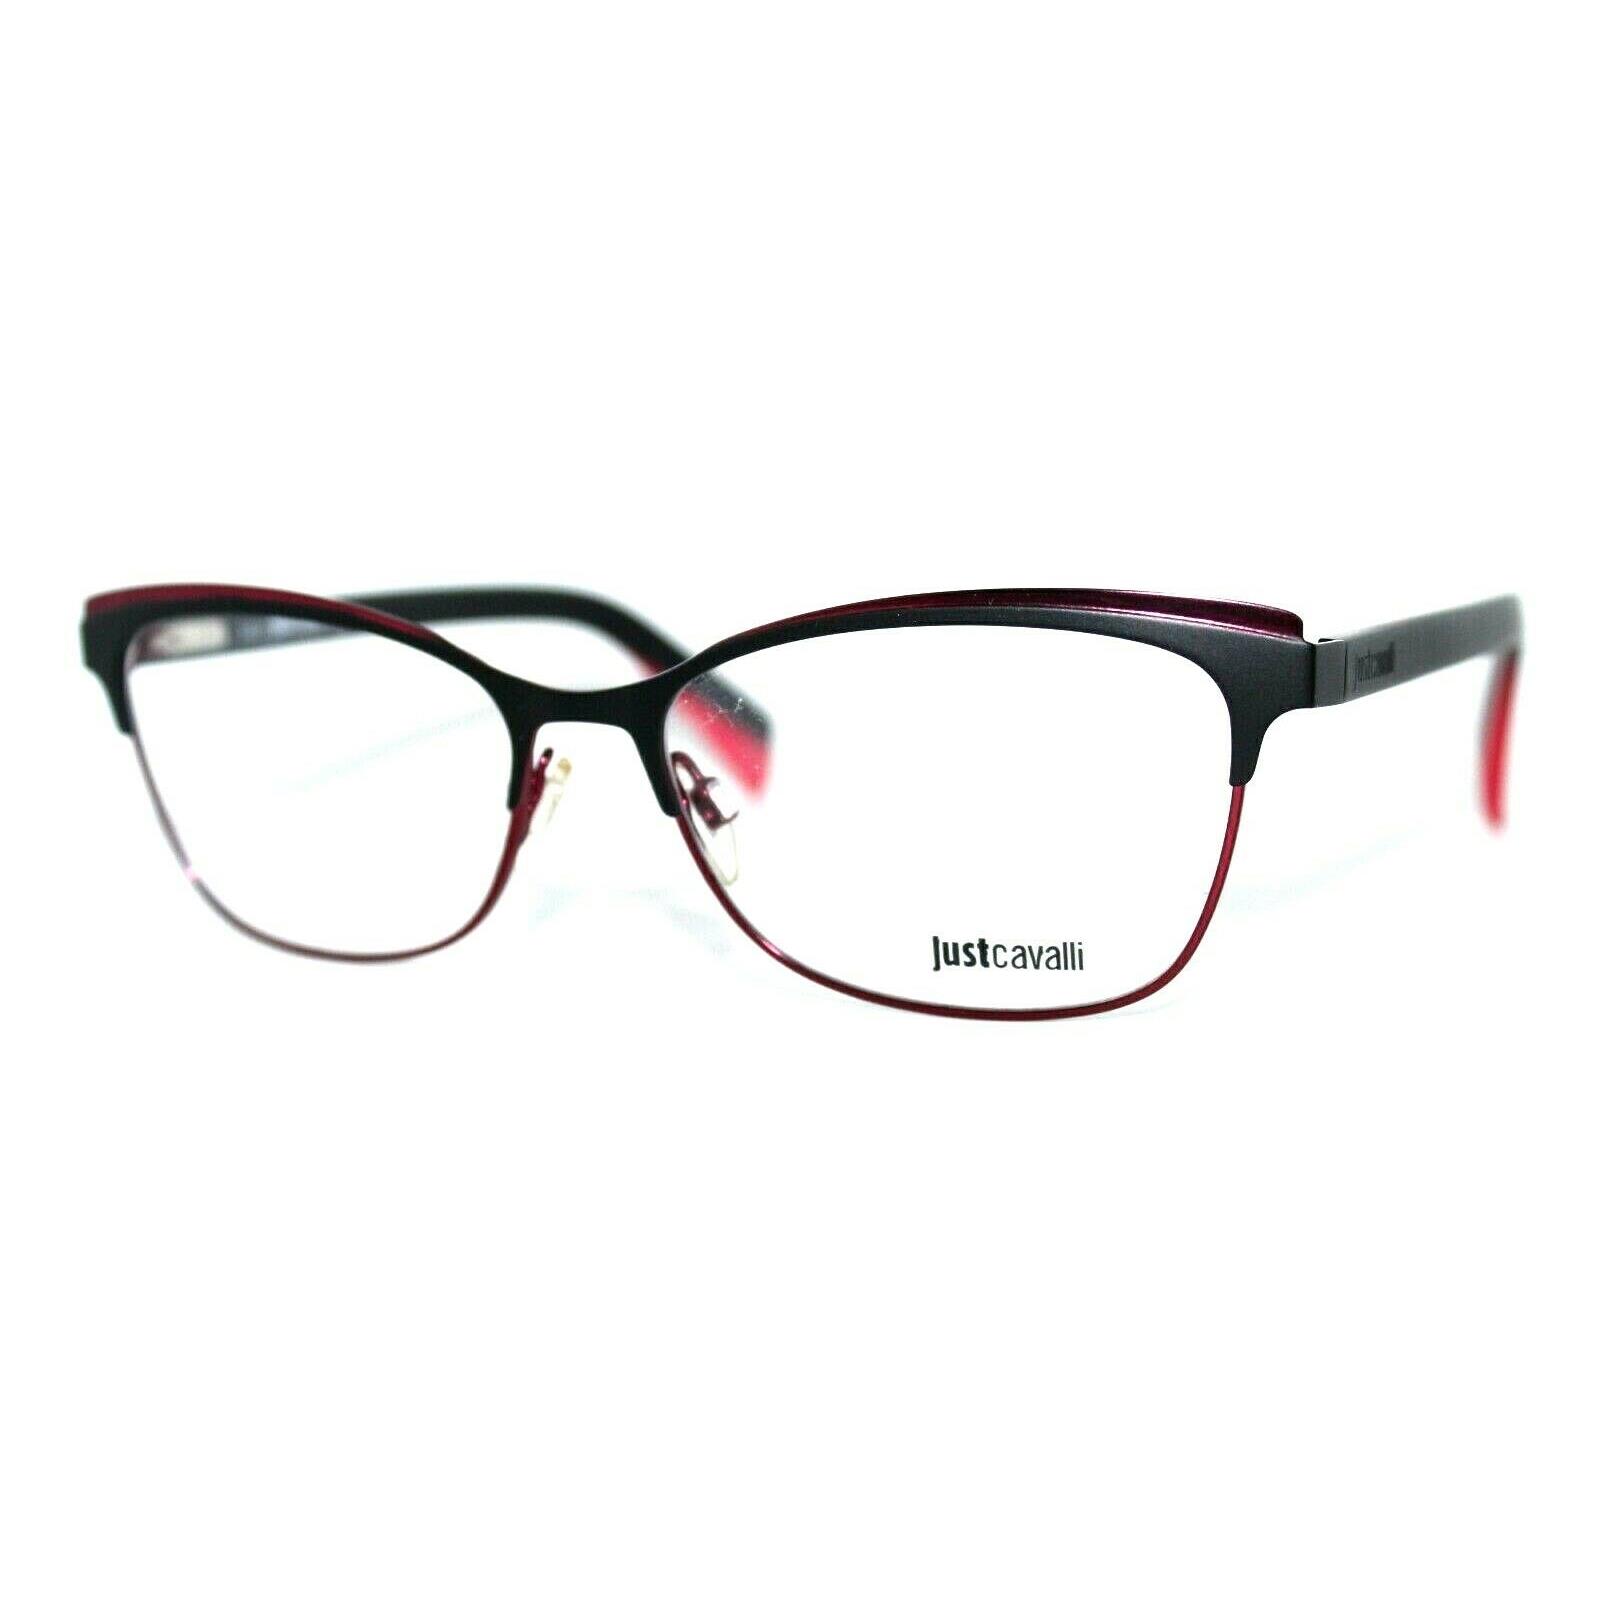 Just Cavalli JC0690 005 Black Eyeglasses Frames 54-15-140MM W/case